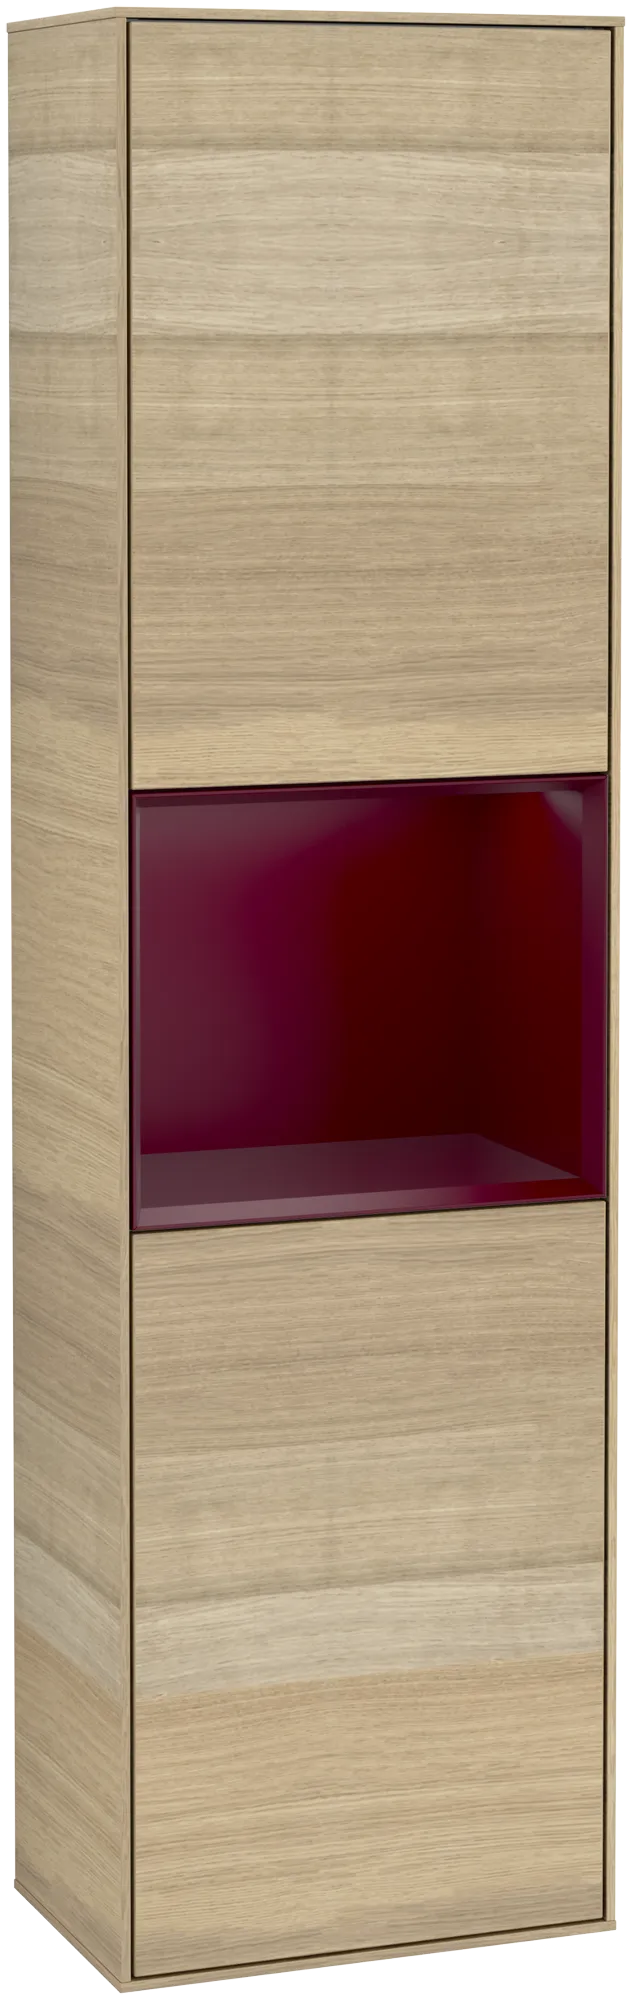 Bild von VILLEROY BOCH Finion Hochschrank, mit Beleuchtung, 2 Türen, 418 x 1516 x 270 mm, Oak Veneer / Peony Matt Lacquer #G470HBPC